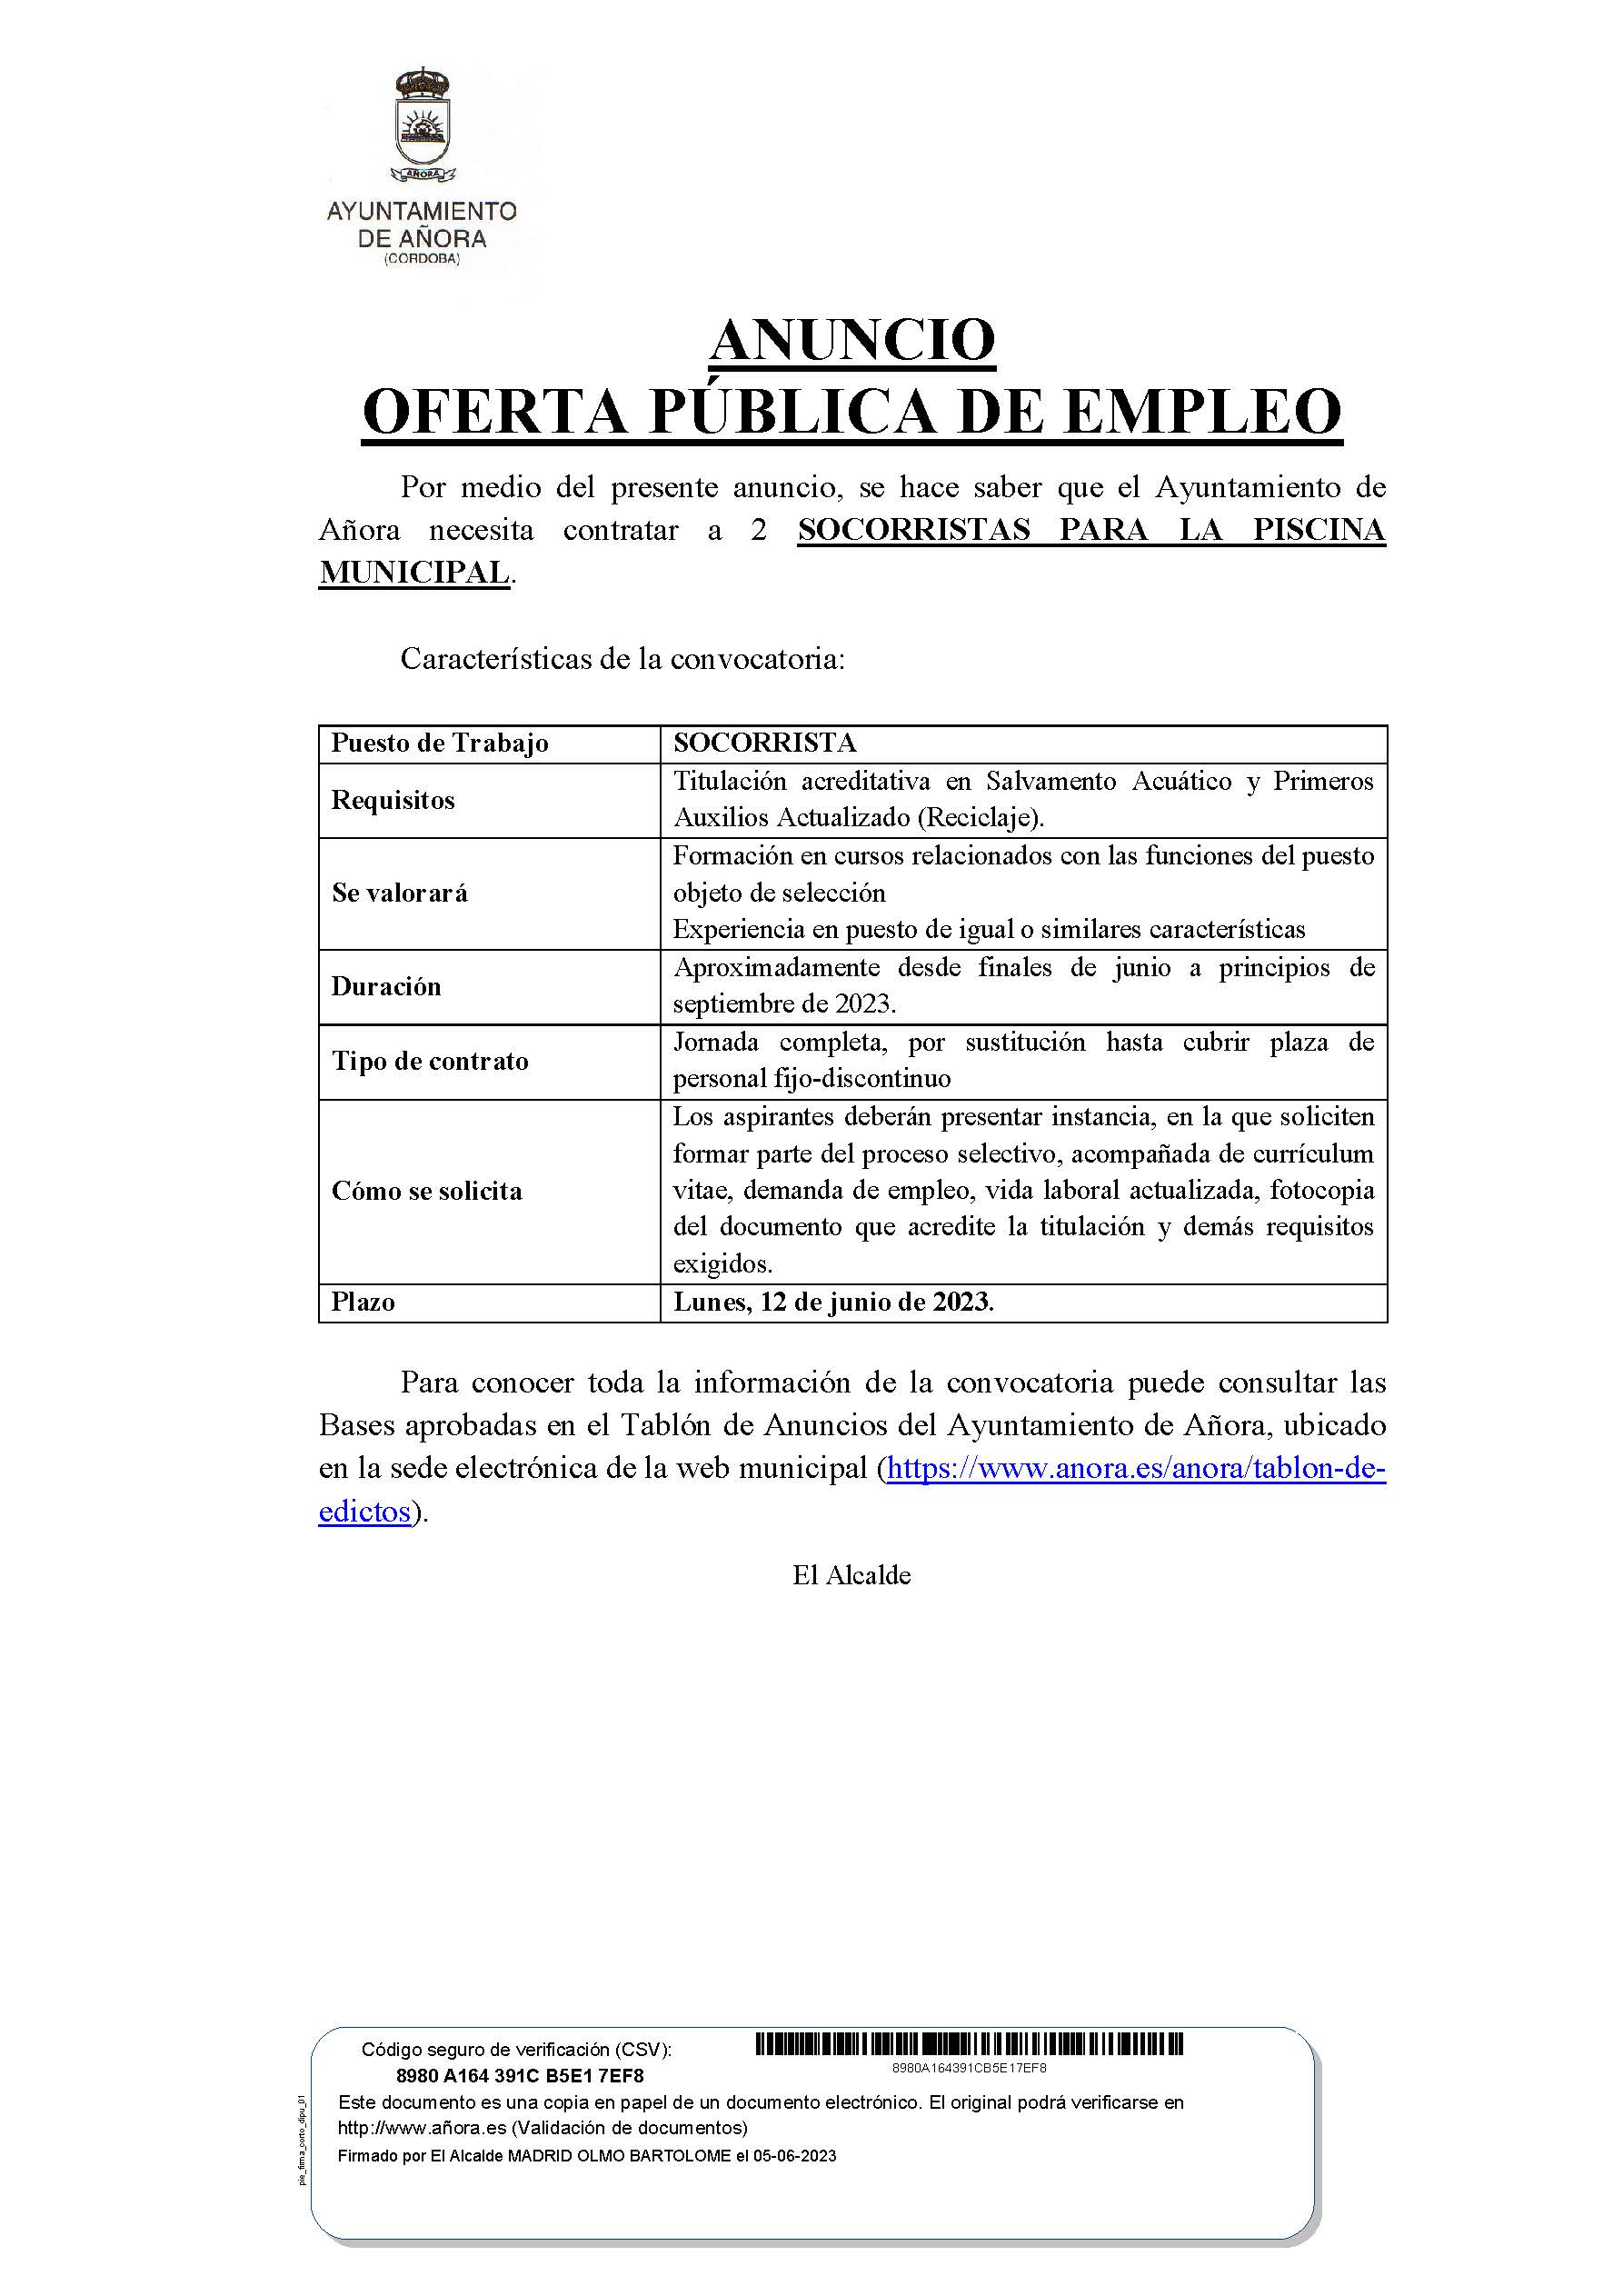 ANUNCIO OFERTA PUBILCA DE EMPLEO DE DOS SOCORRISTAS